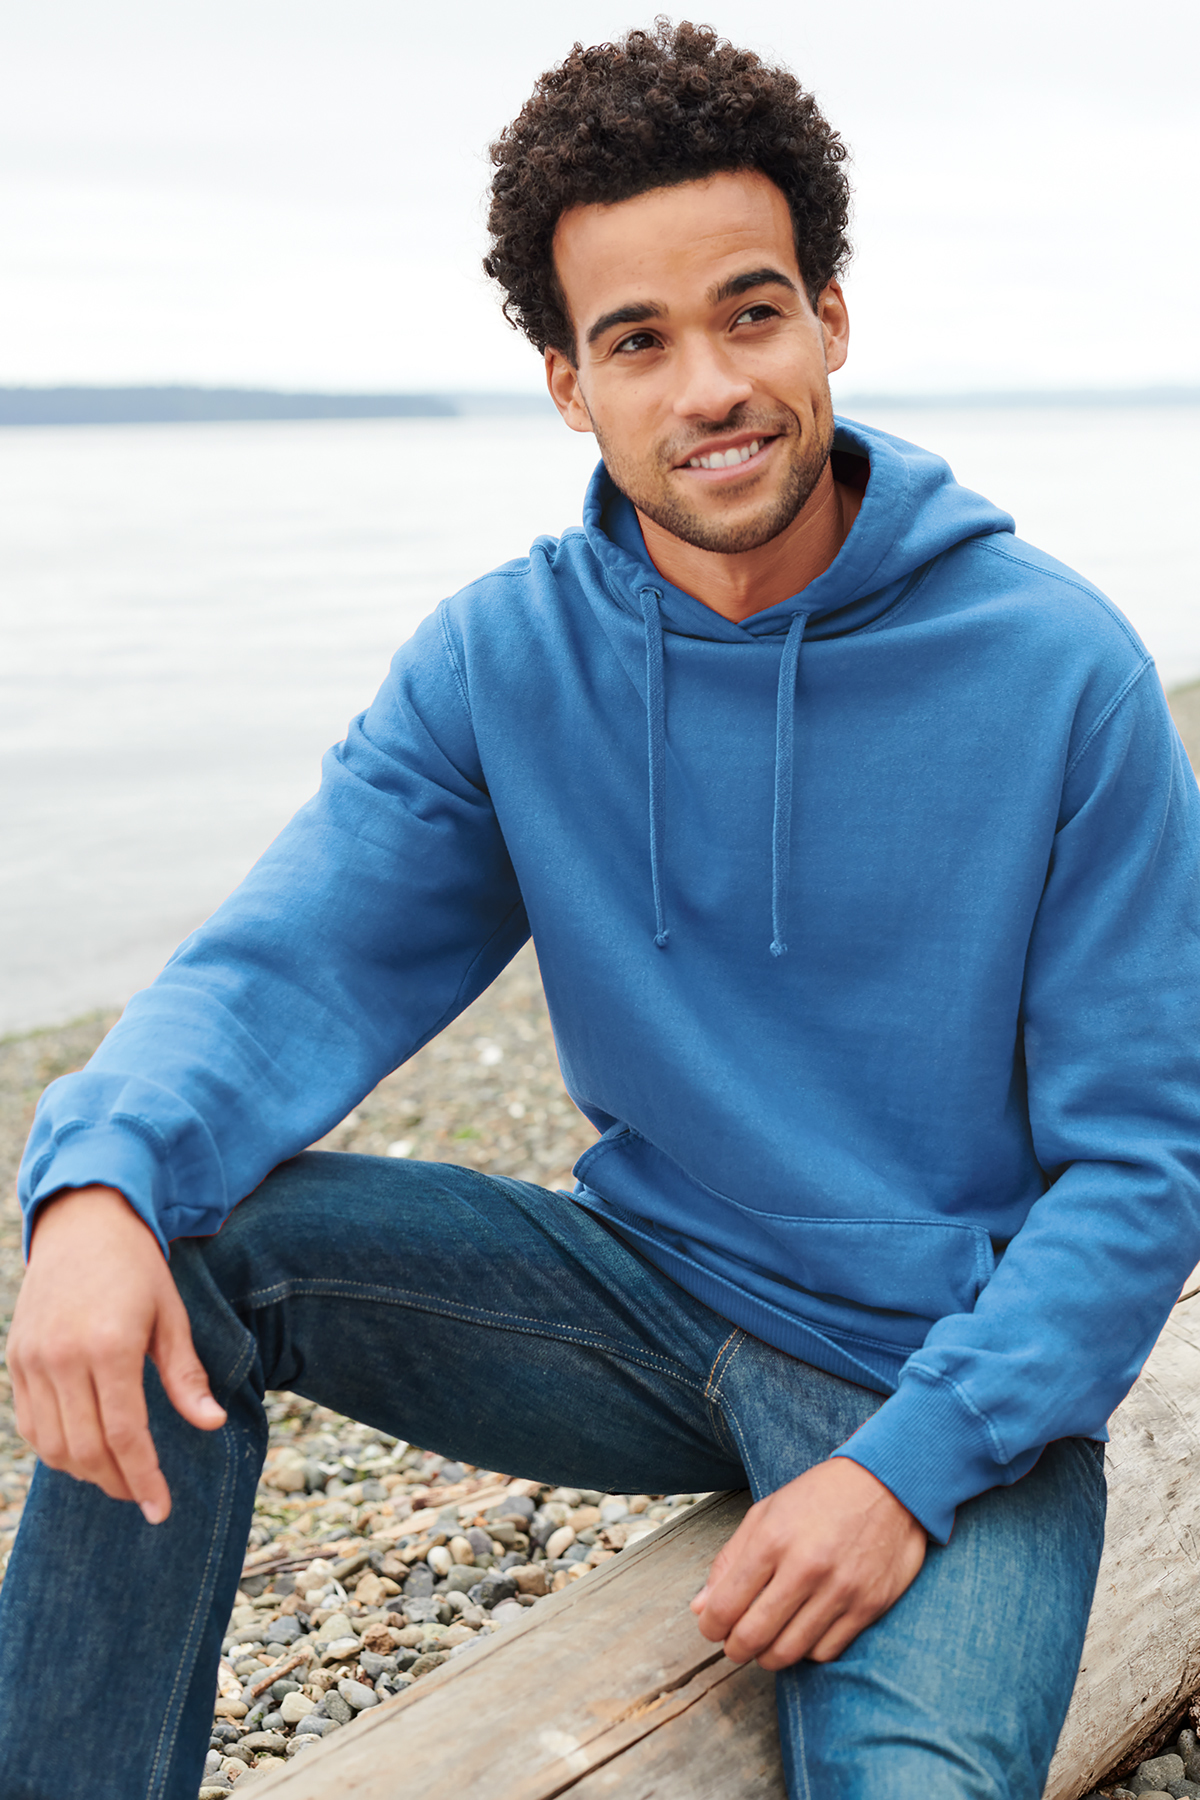 Port & Company Beach Wash Garment-Dyed Pullover Hooded Sweatshirt